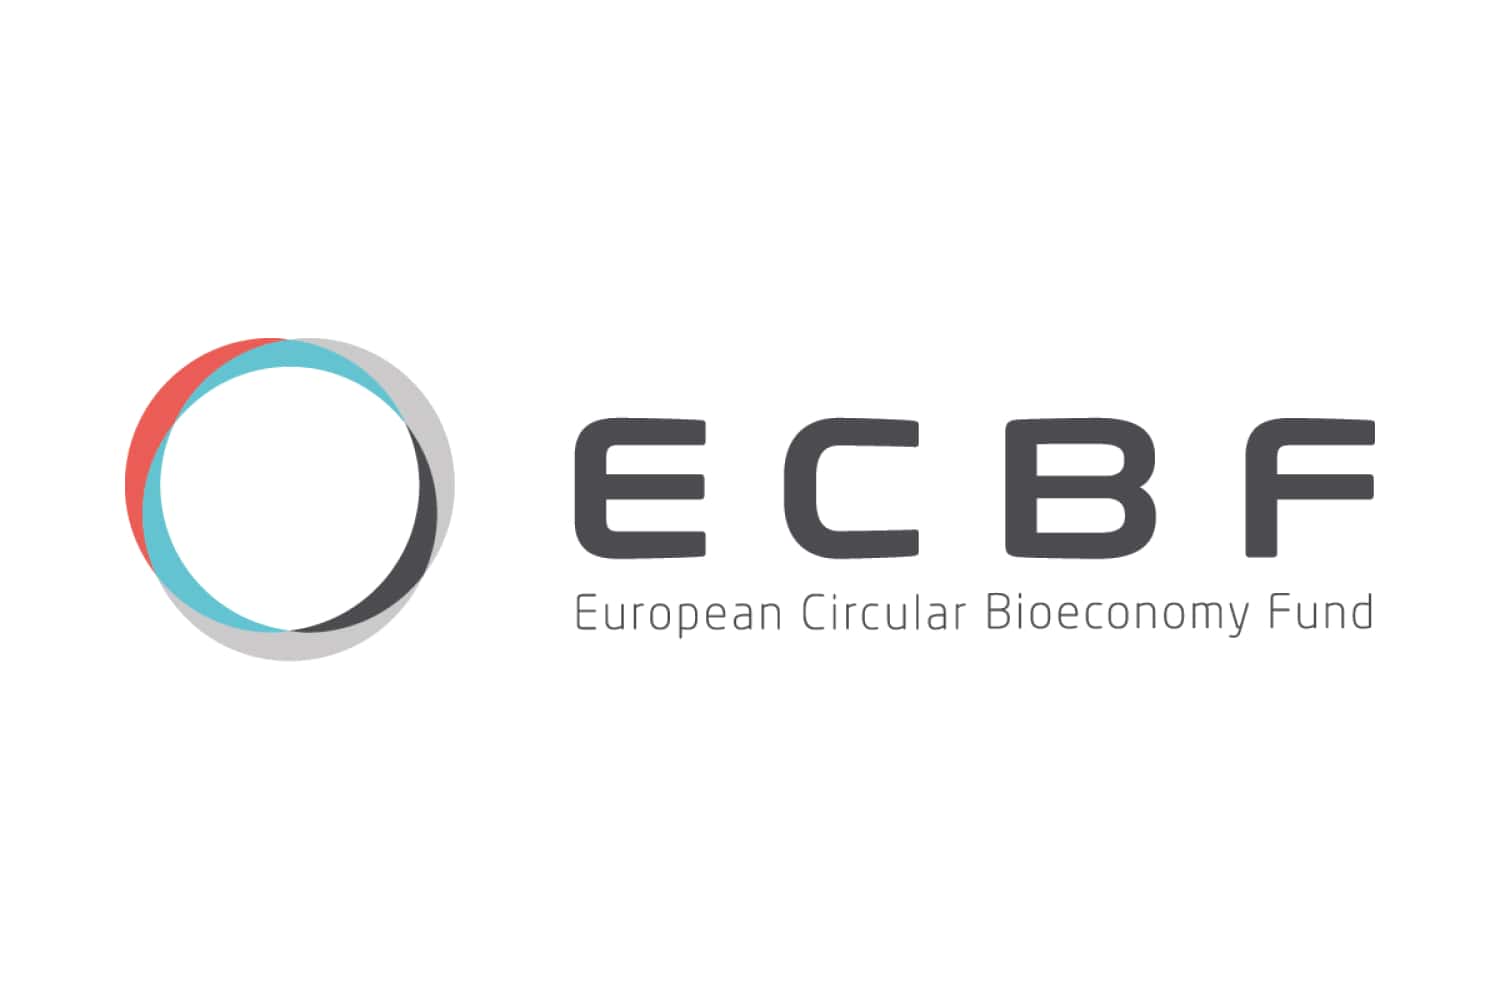 European Circular Bioeconomy Fund logo